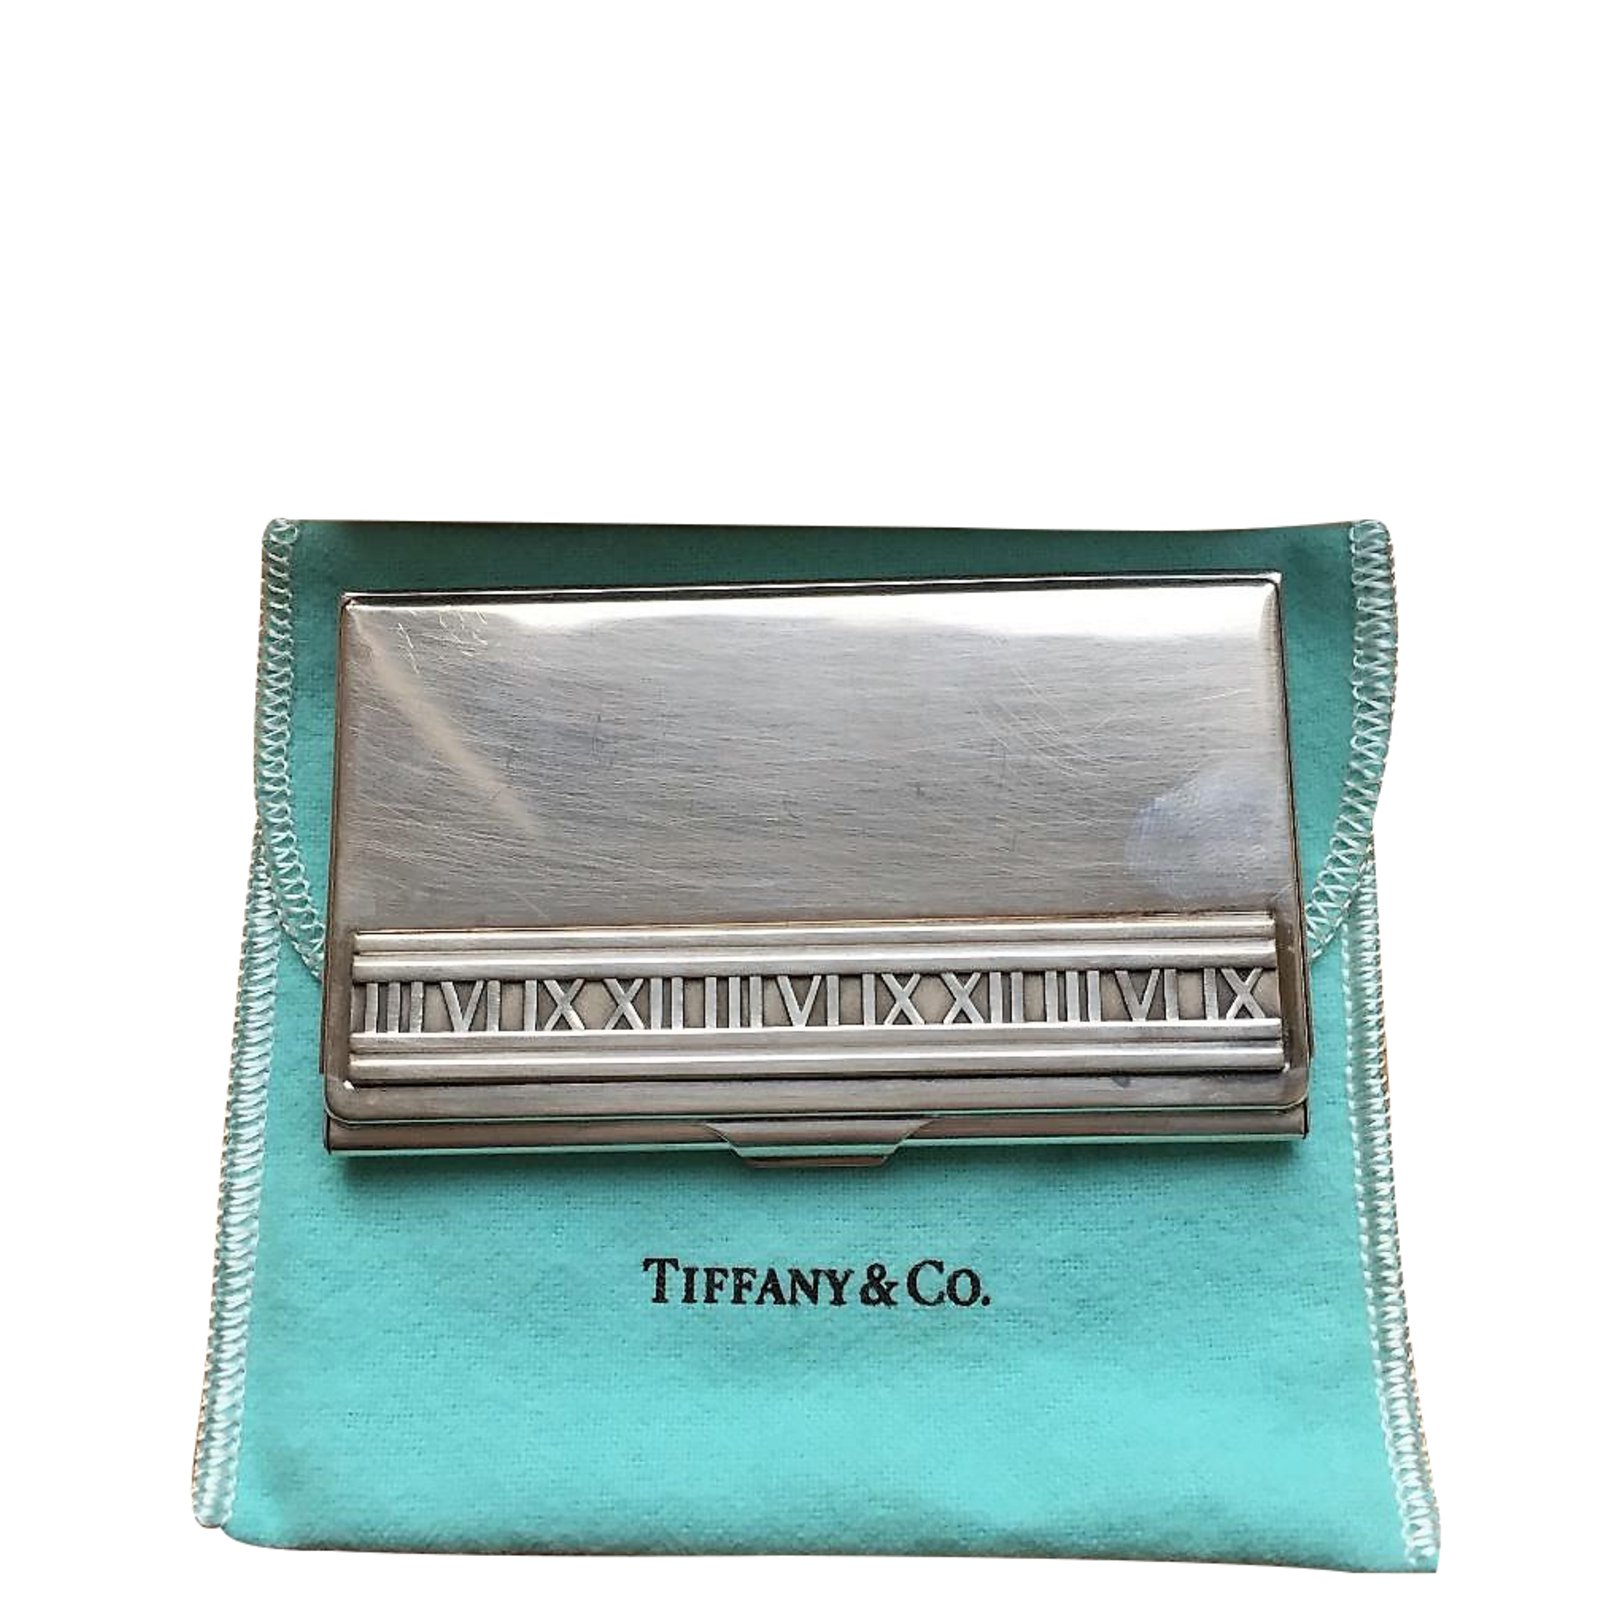 tiffany & co wallet